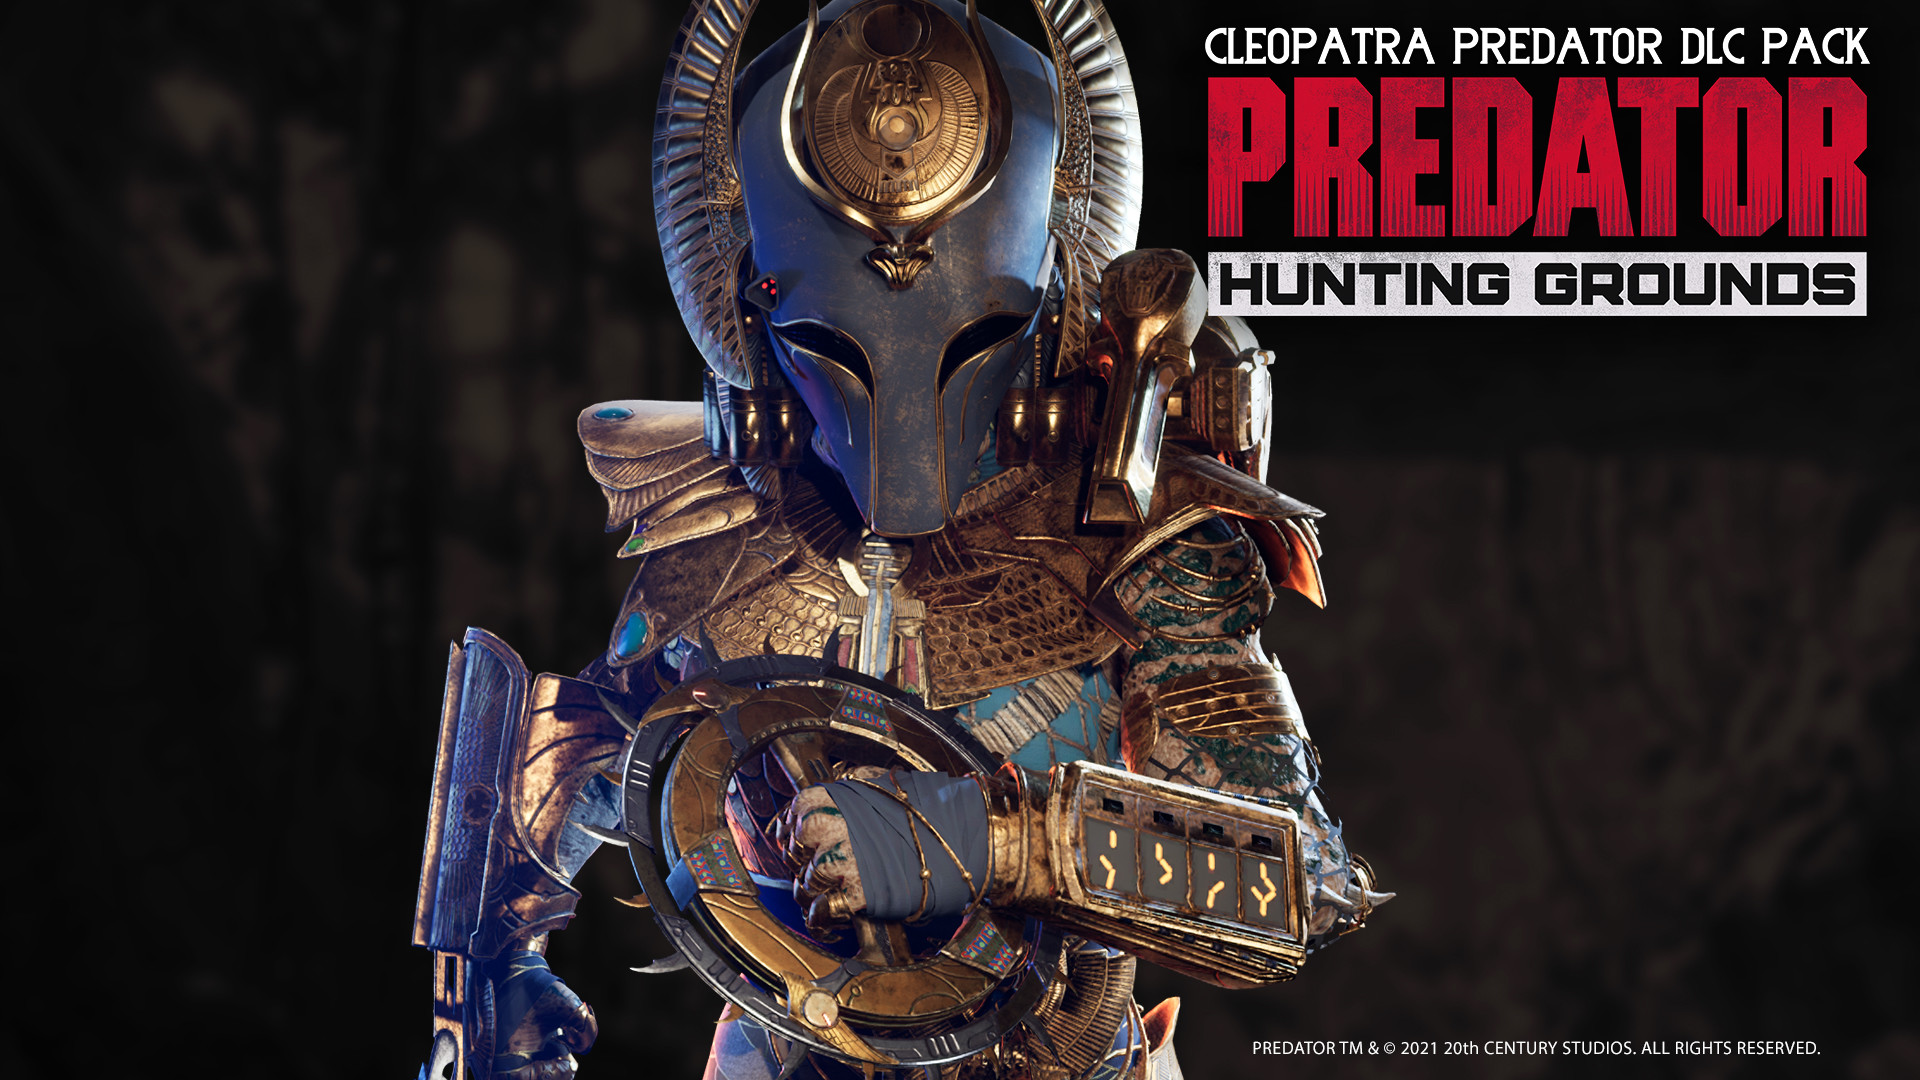 [$ 2.08] Predator: Hunting Grounds - Cleopatra DLC Steam CD Key